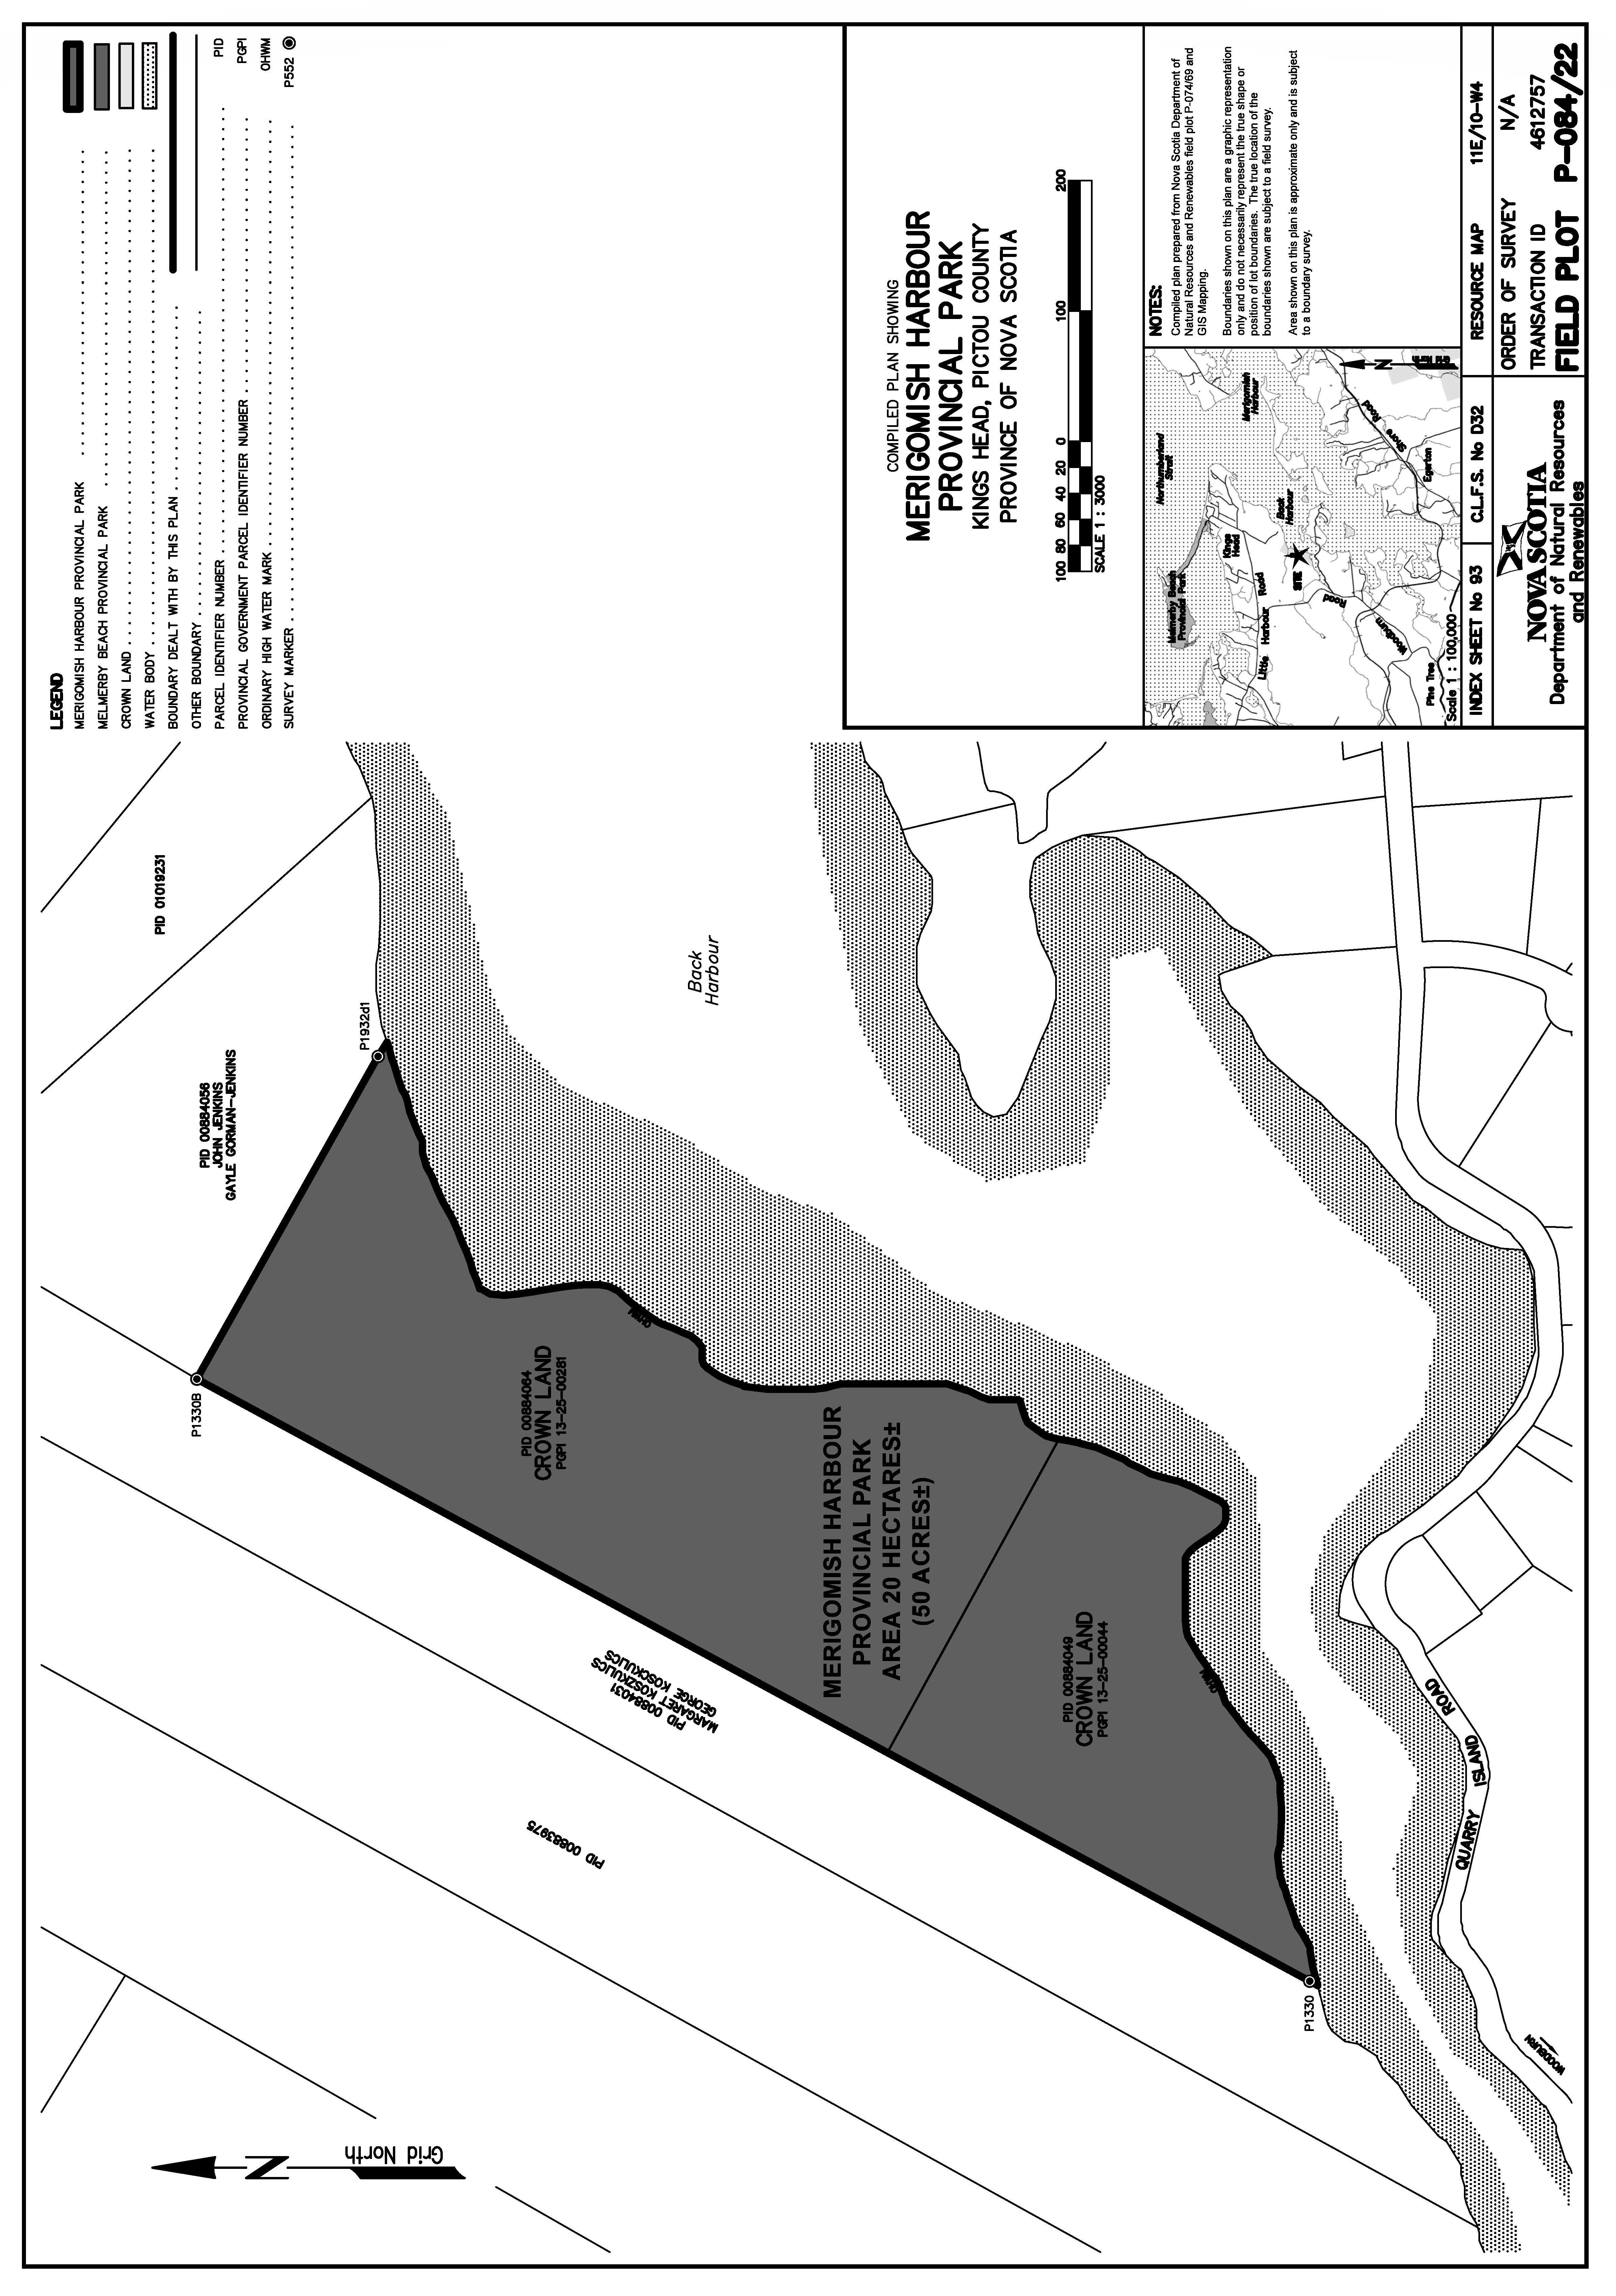 Graphic showing map of Merigomish Harbour Provincial Park